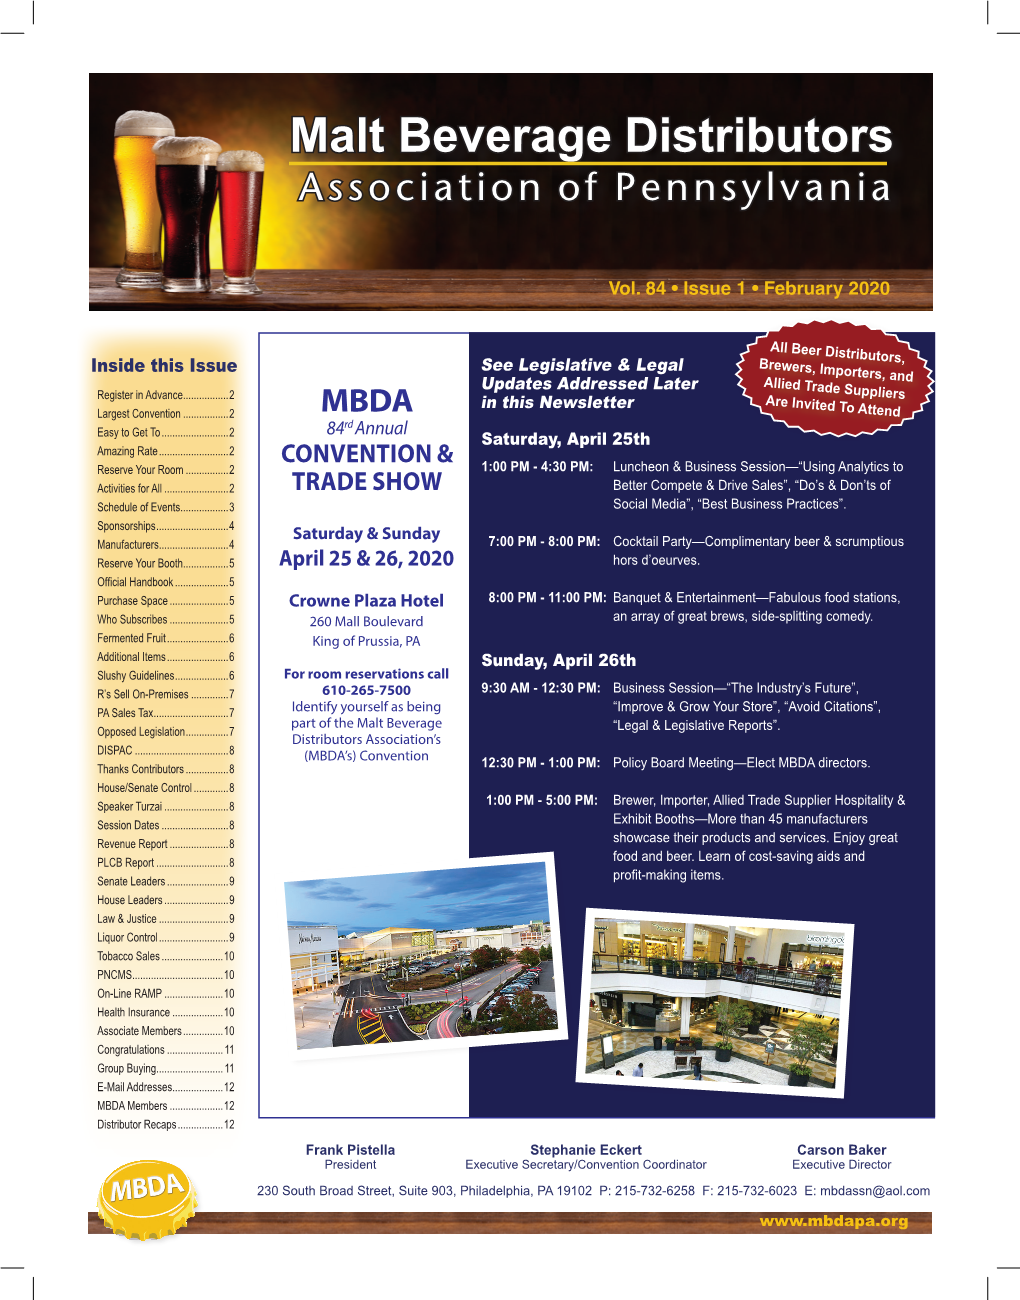 Malt Beverage Distributors Association of Pennsylvania